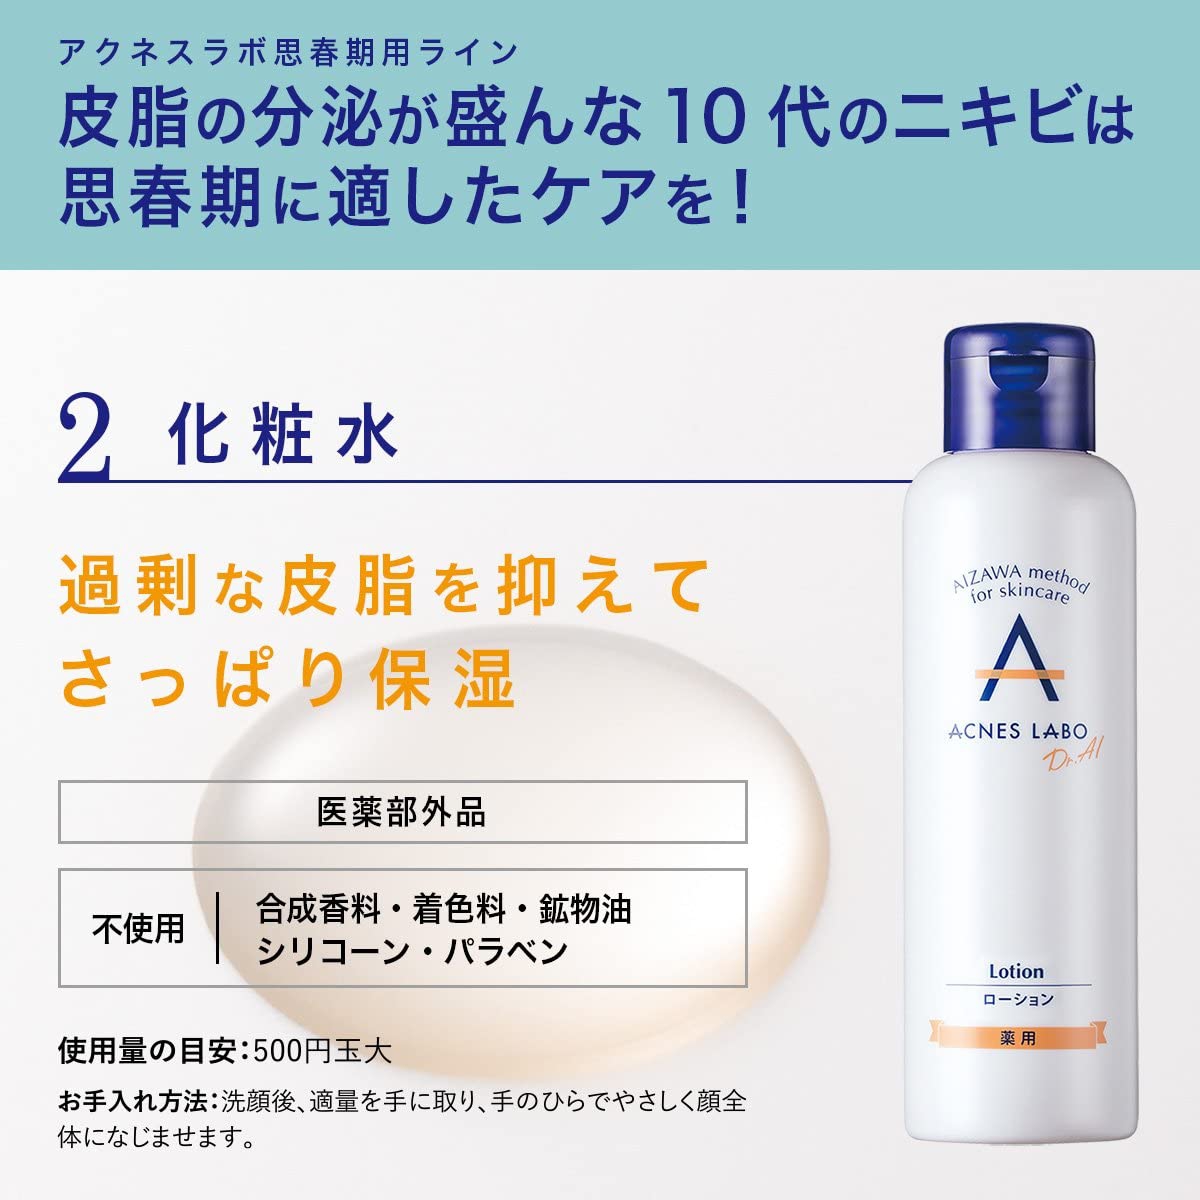 ACNES LABO(アクネスラボ) 薬用ローション化粧水 思春期ニキビ用の商品画像3 